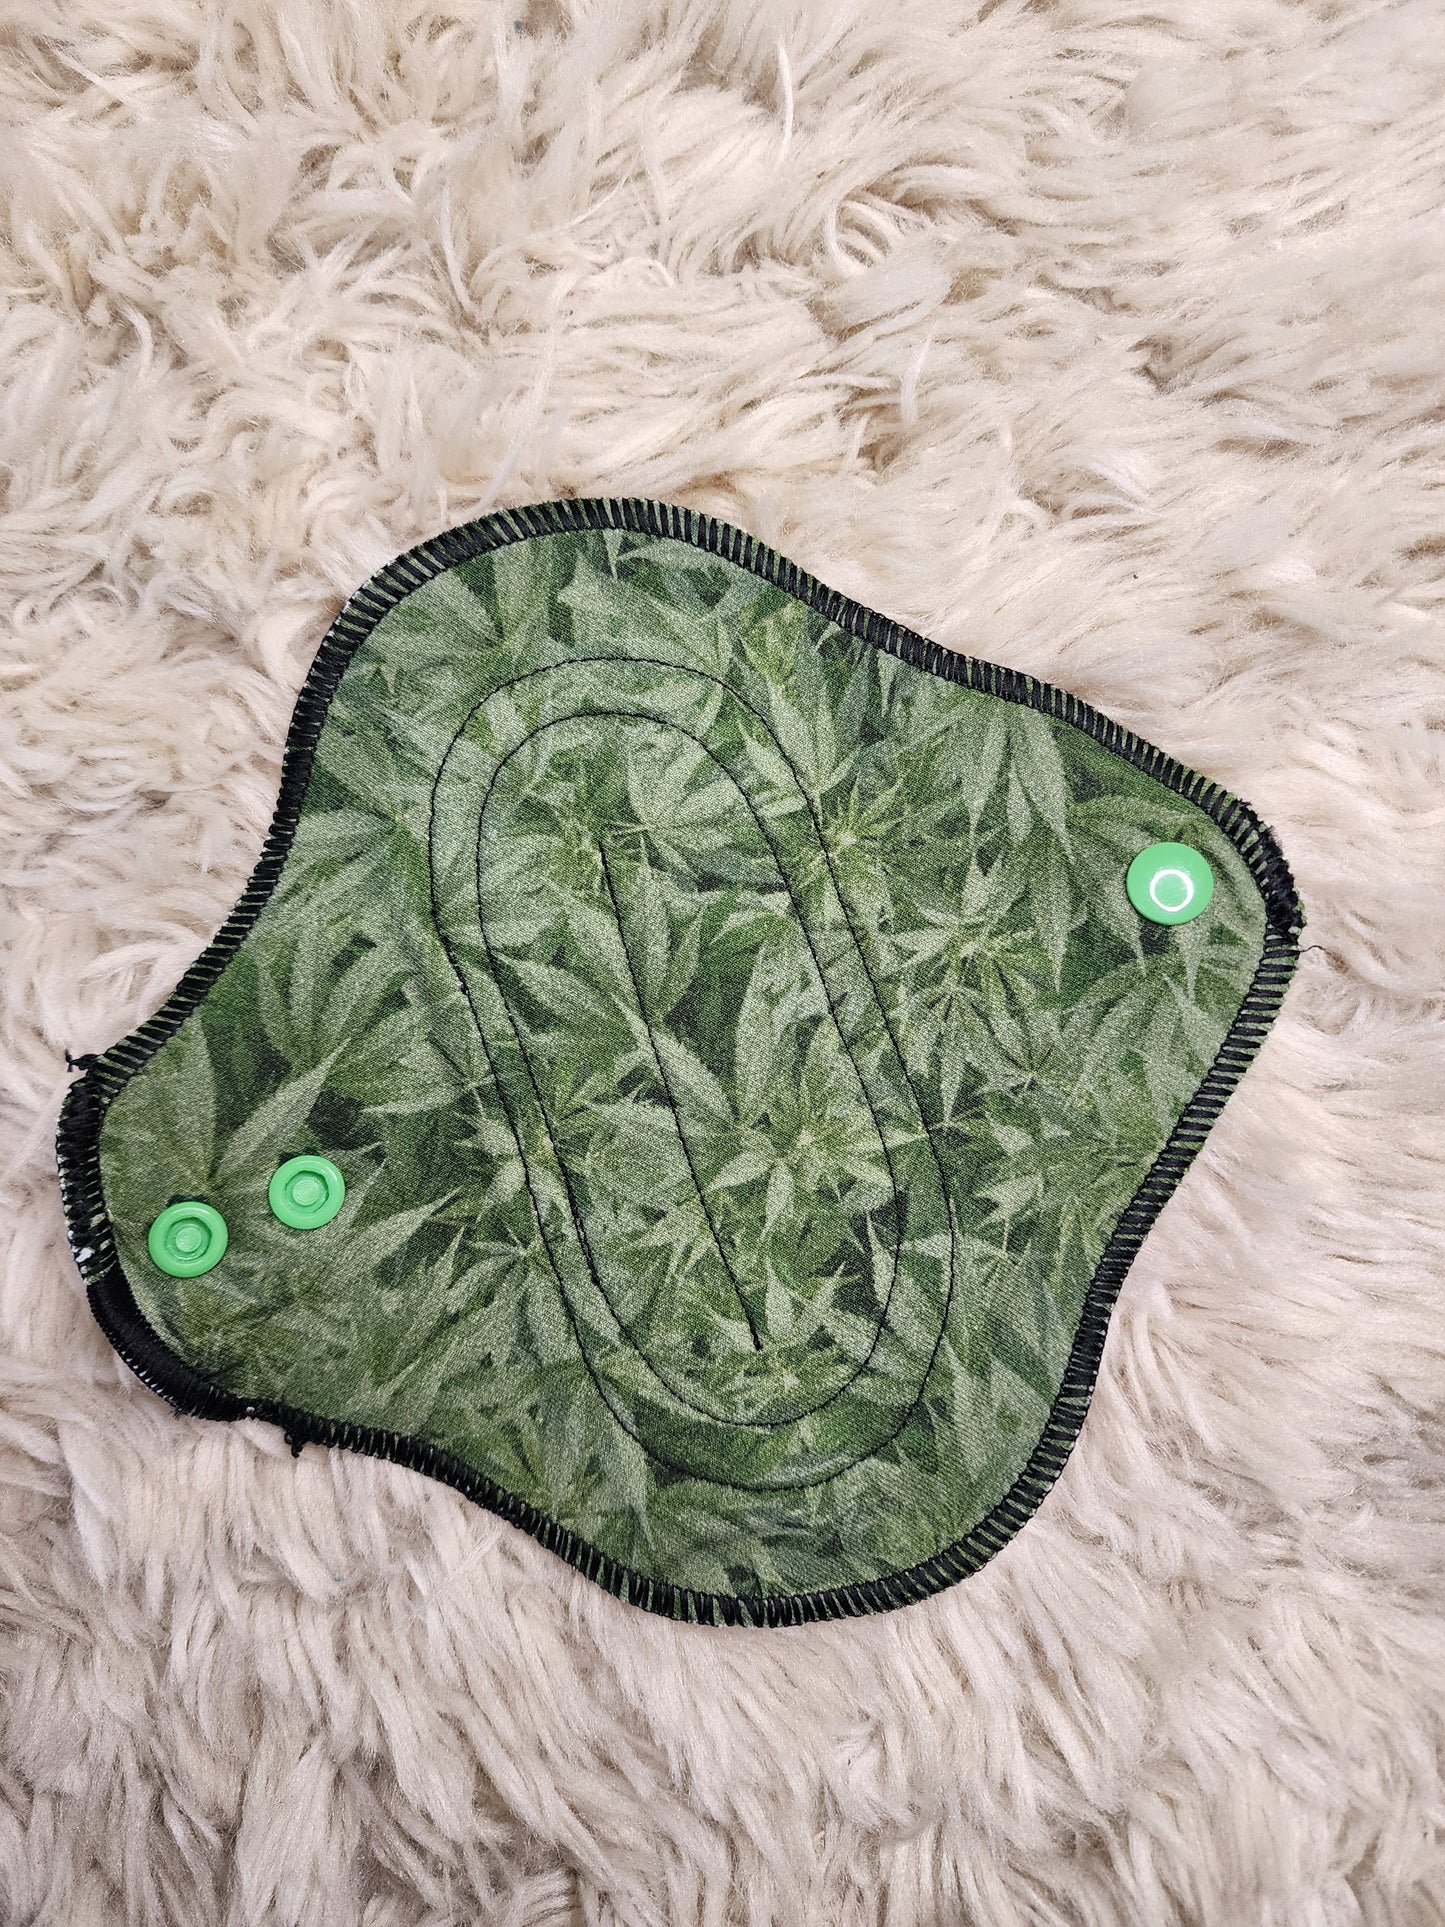 6" Weed cloth pad